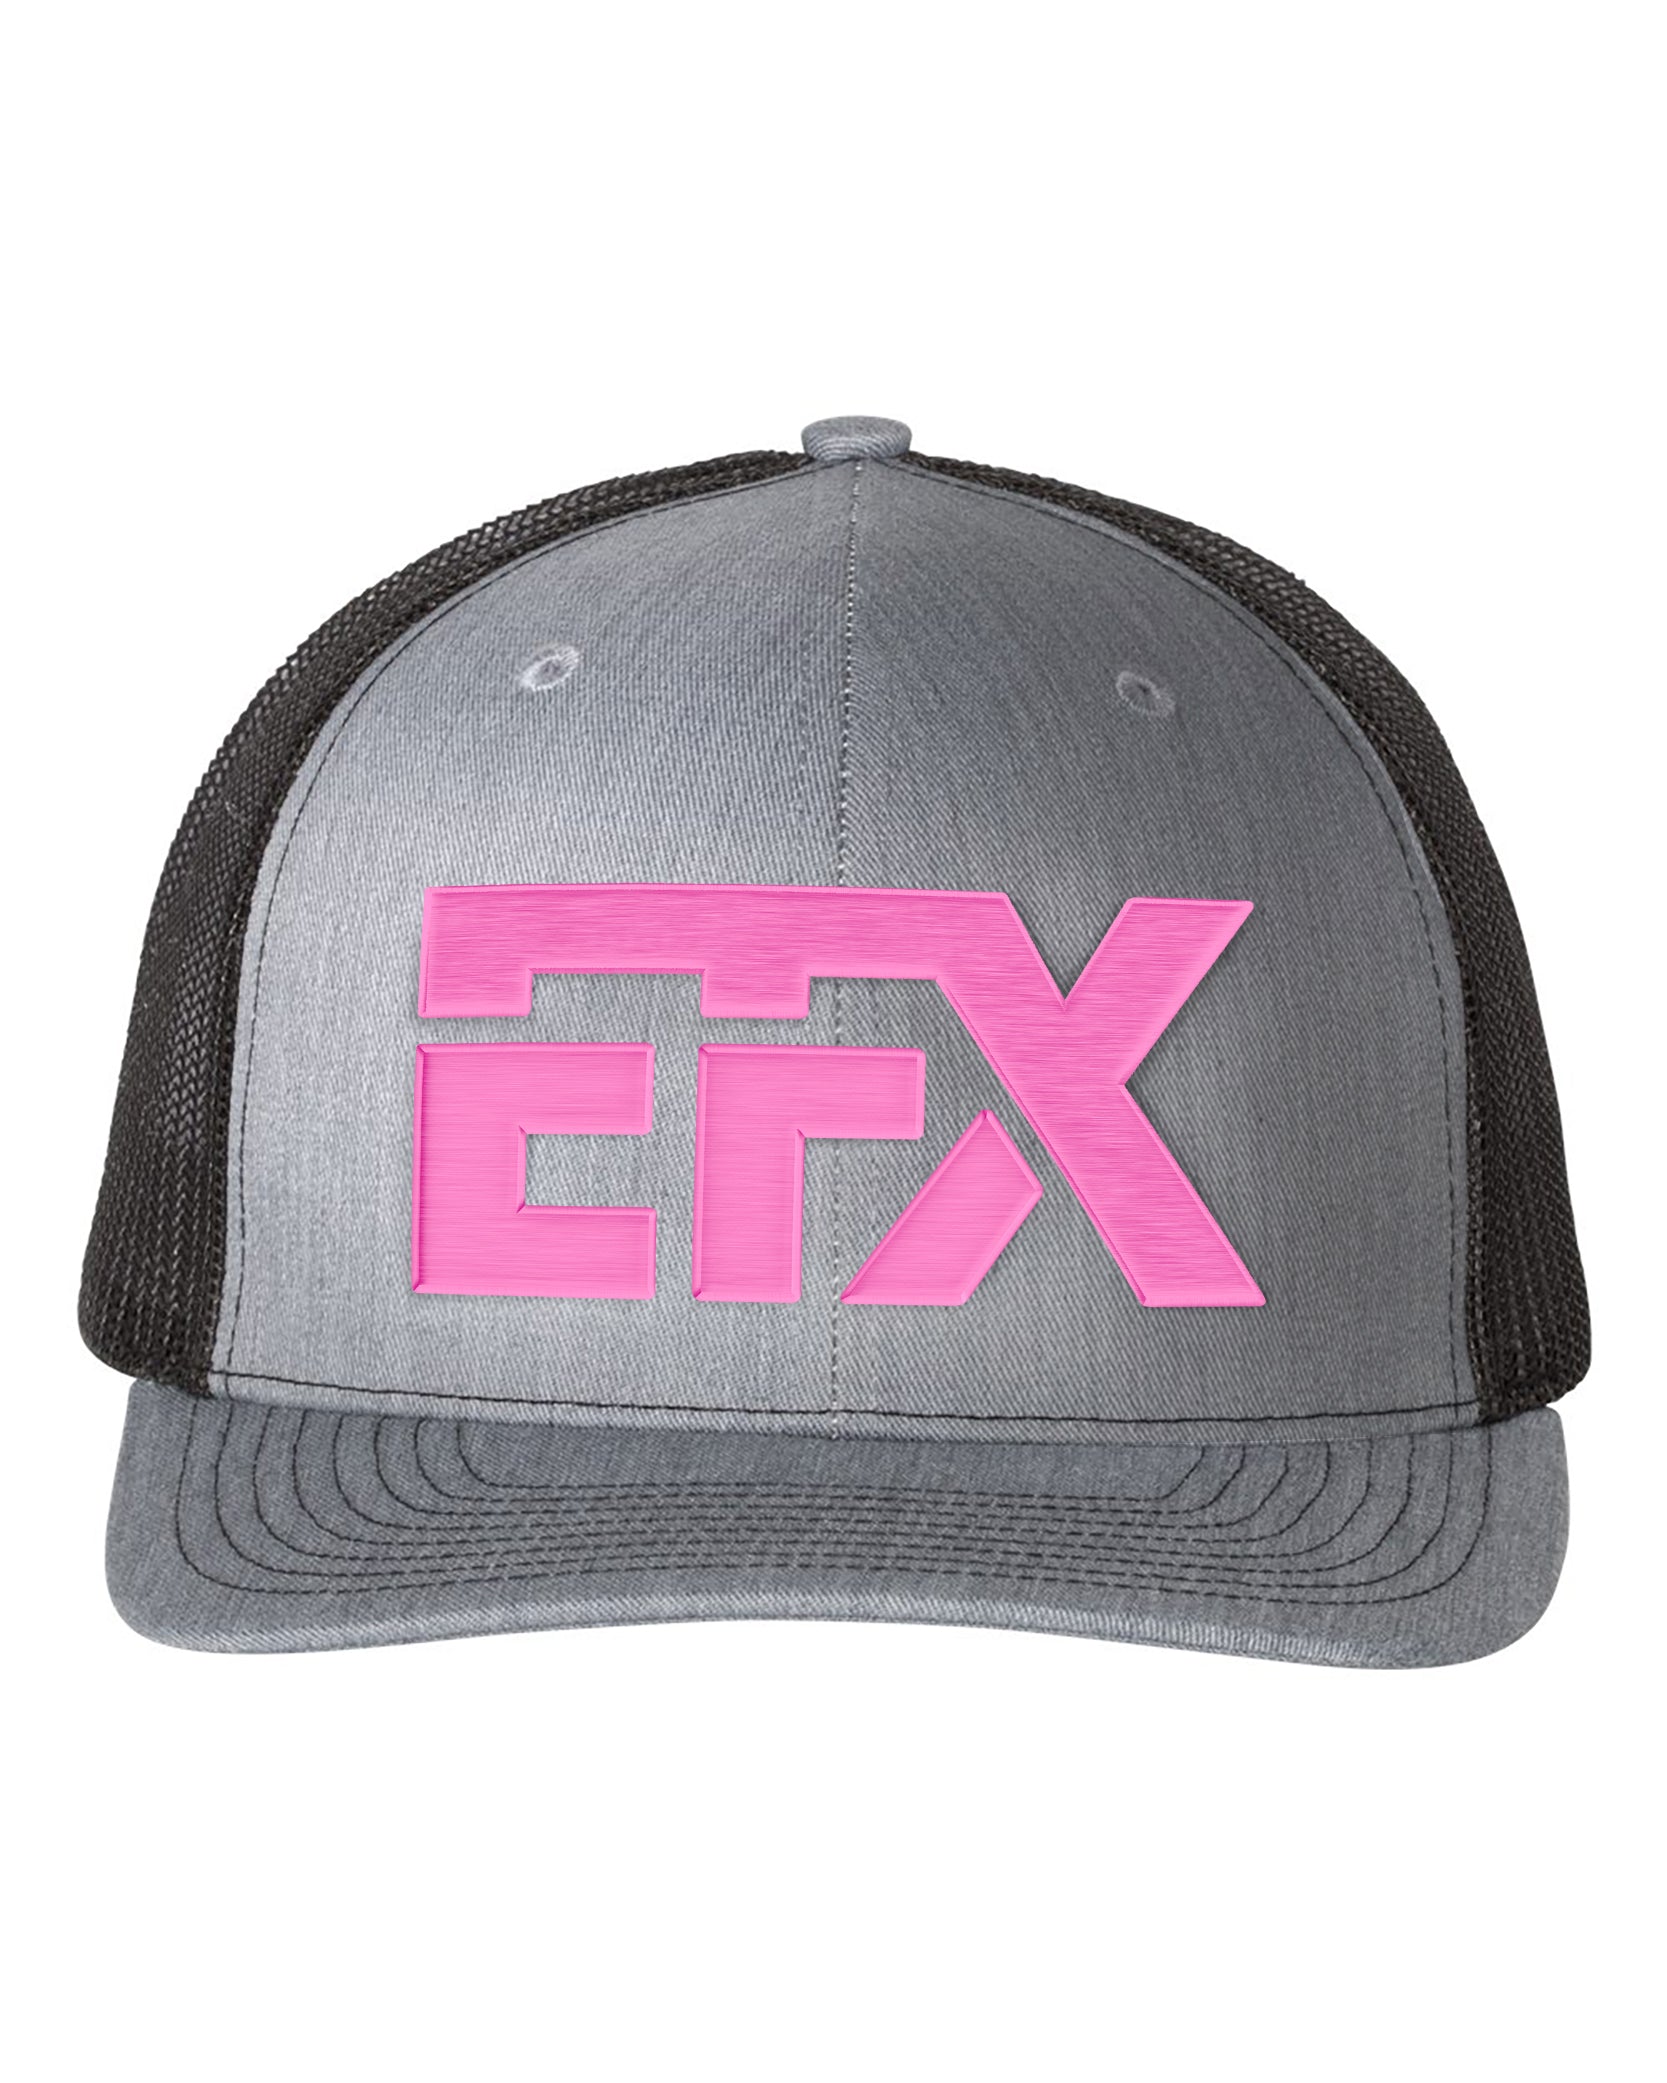 Logo-Short-Pink on Black & Gray Hat